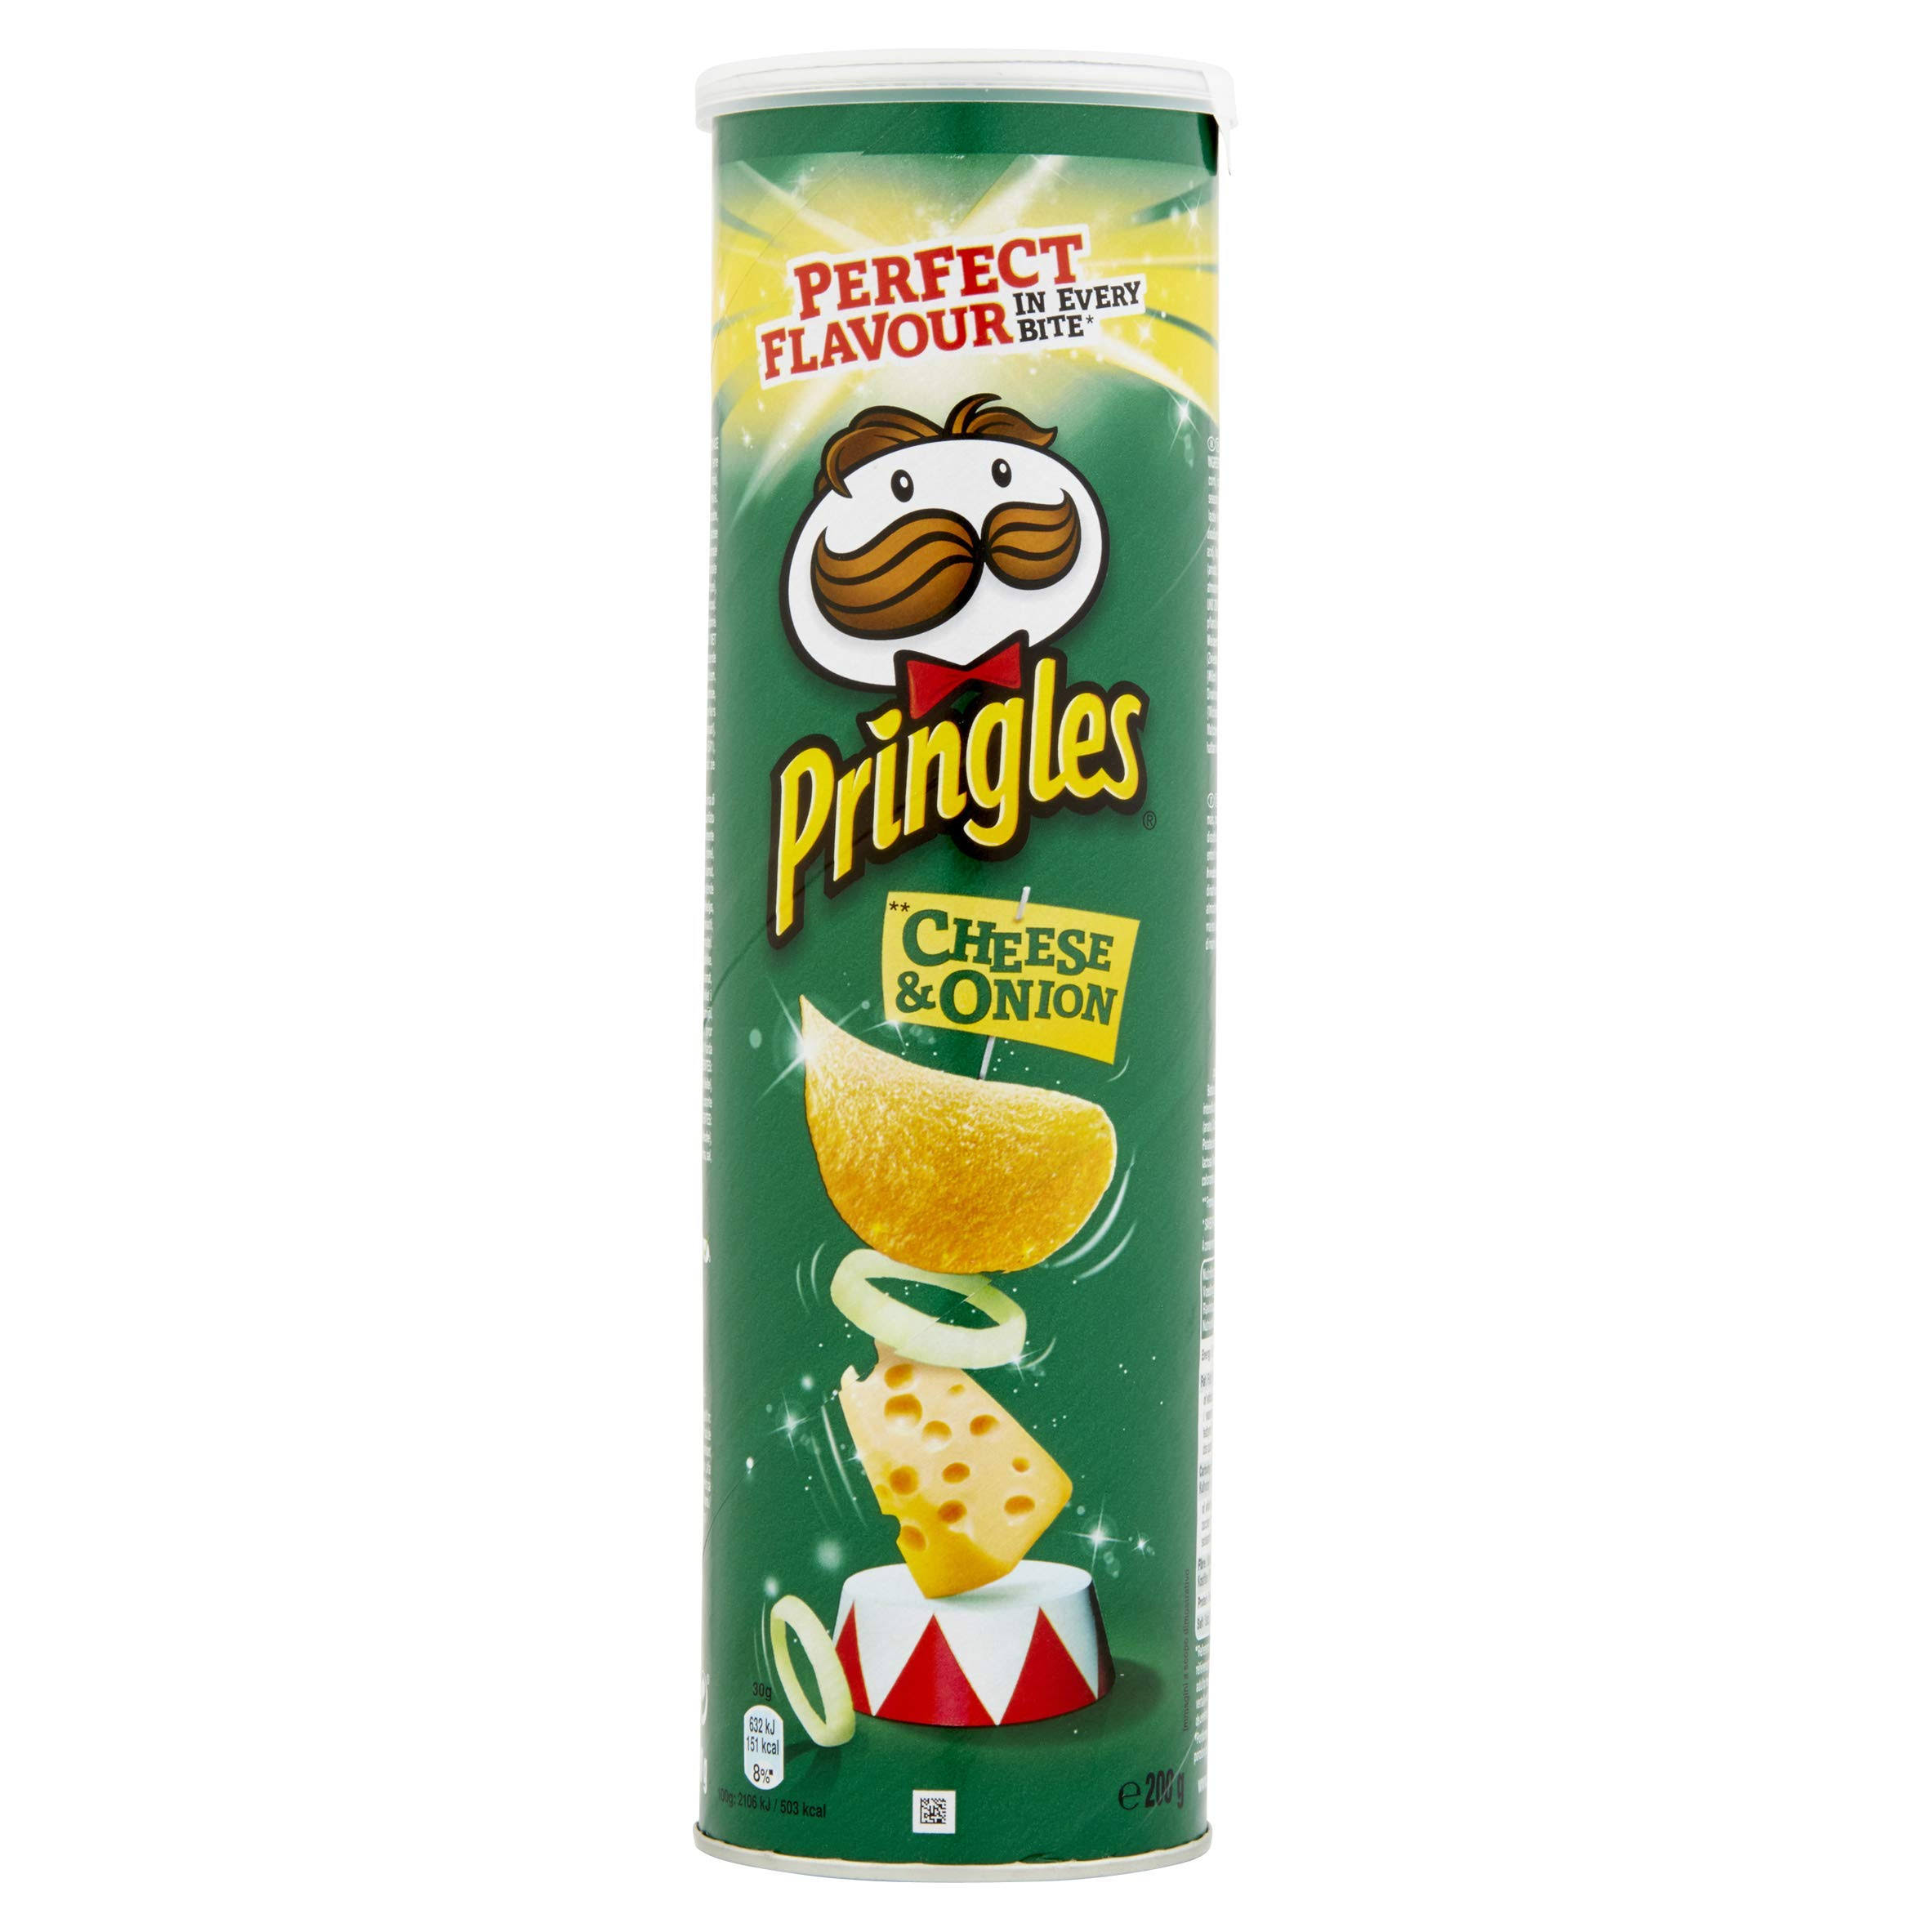 Pringles Potato Crisps - Cheese & Onion, 200g